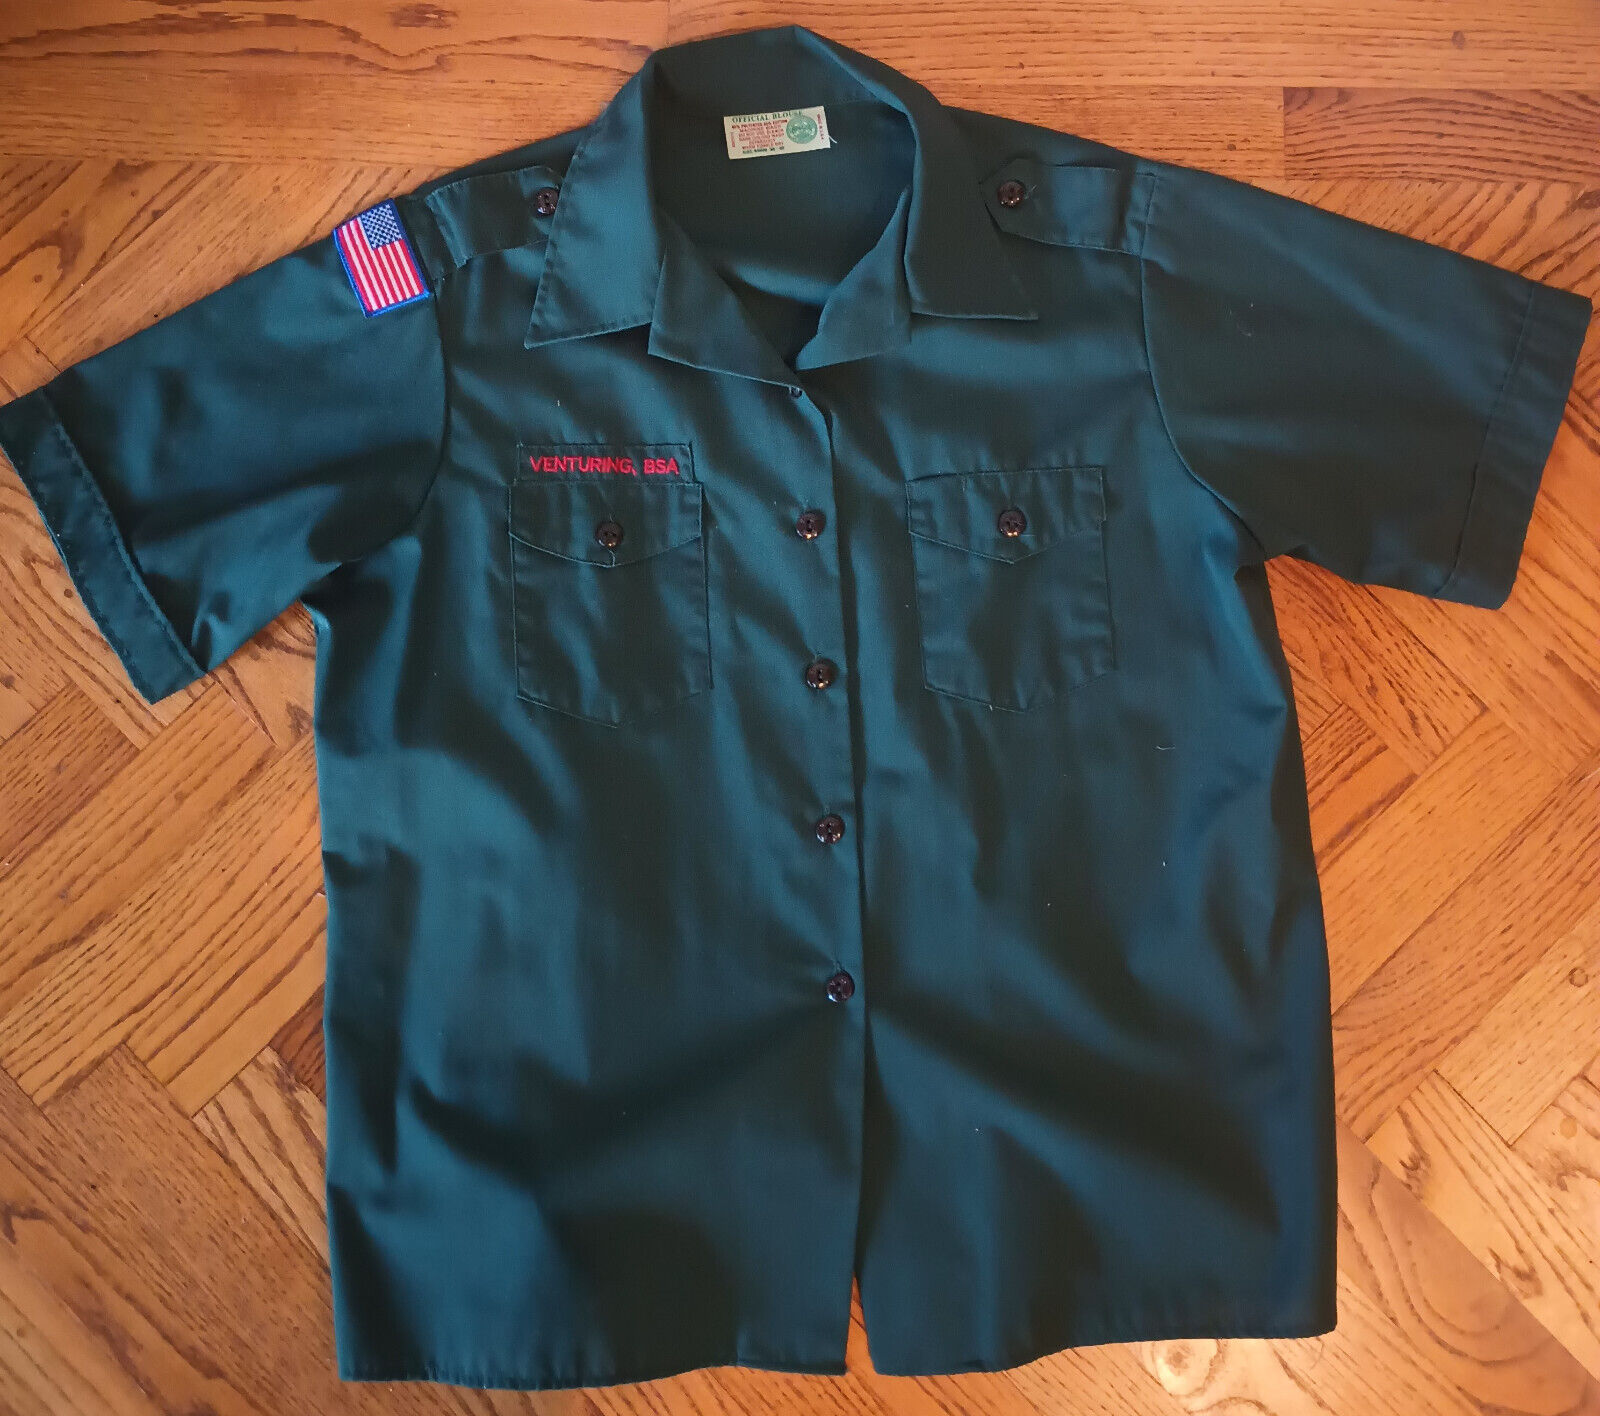 Vintage Venturing Uniform Shirt BSA Boy Scouts of America,  Size 38/40